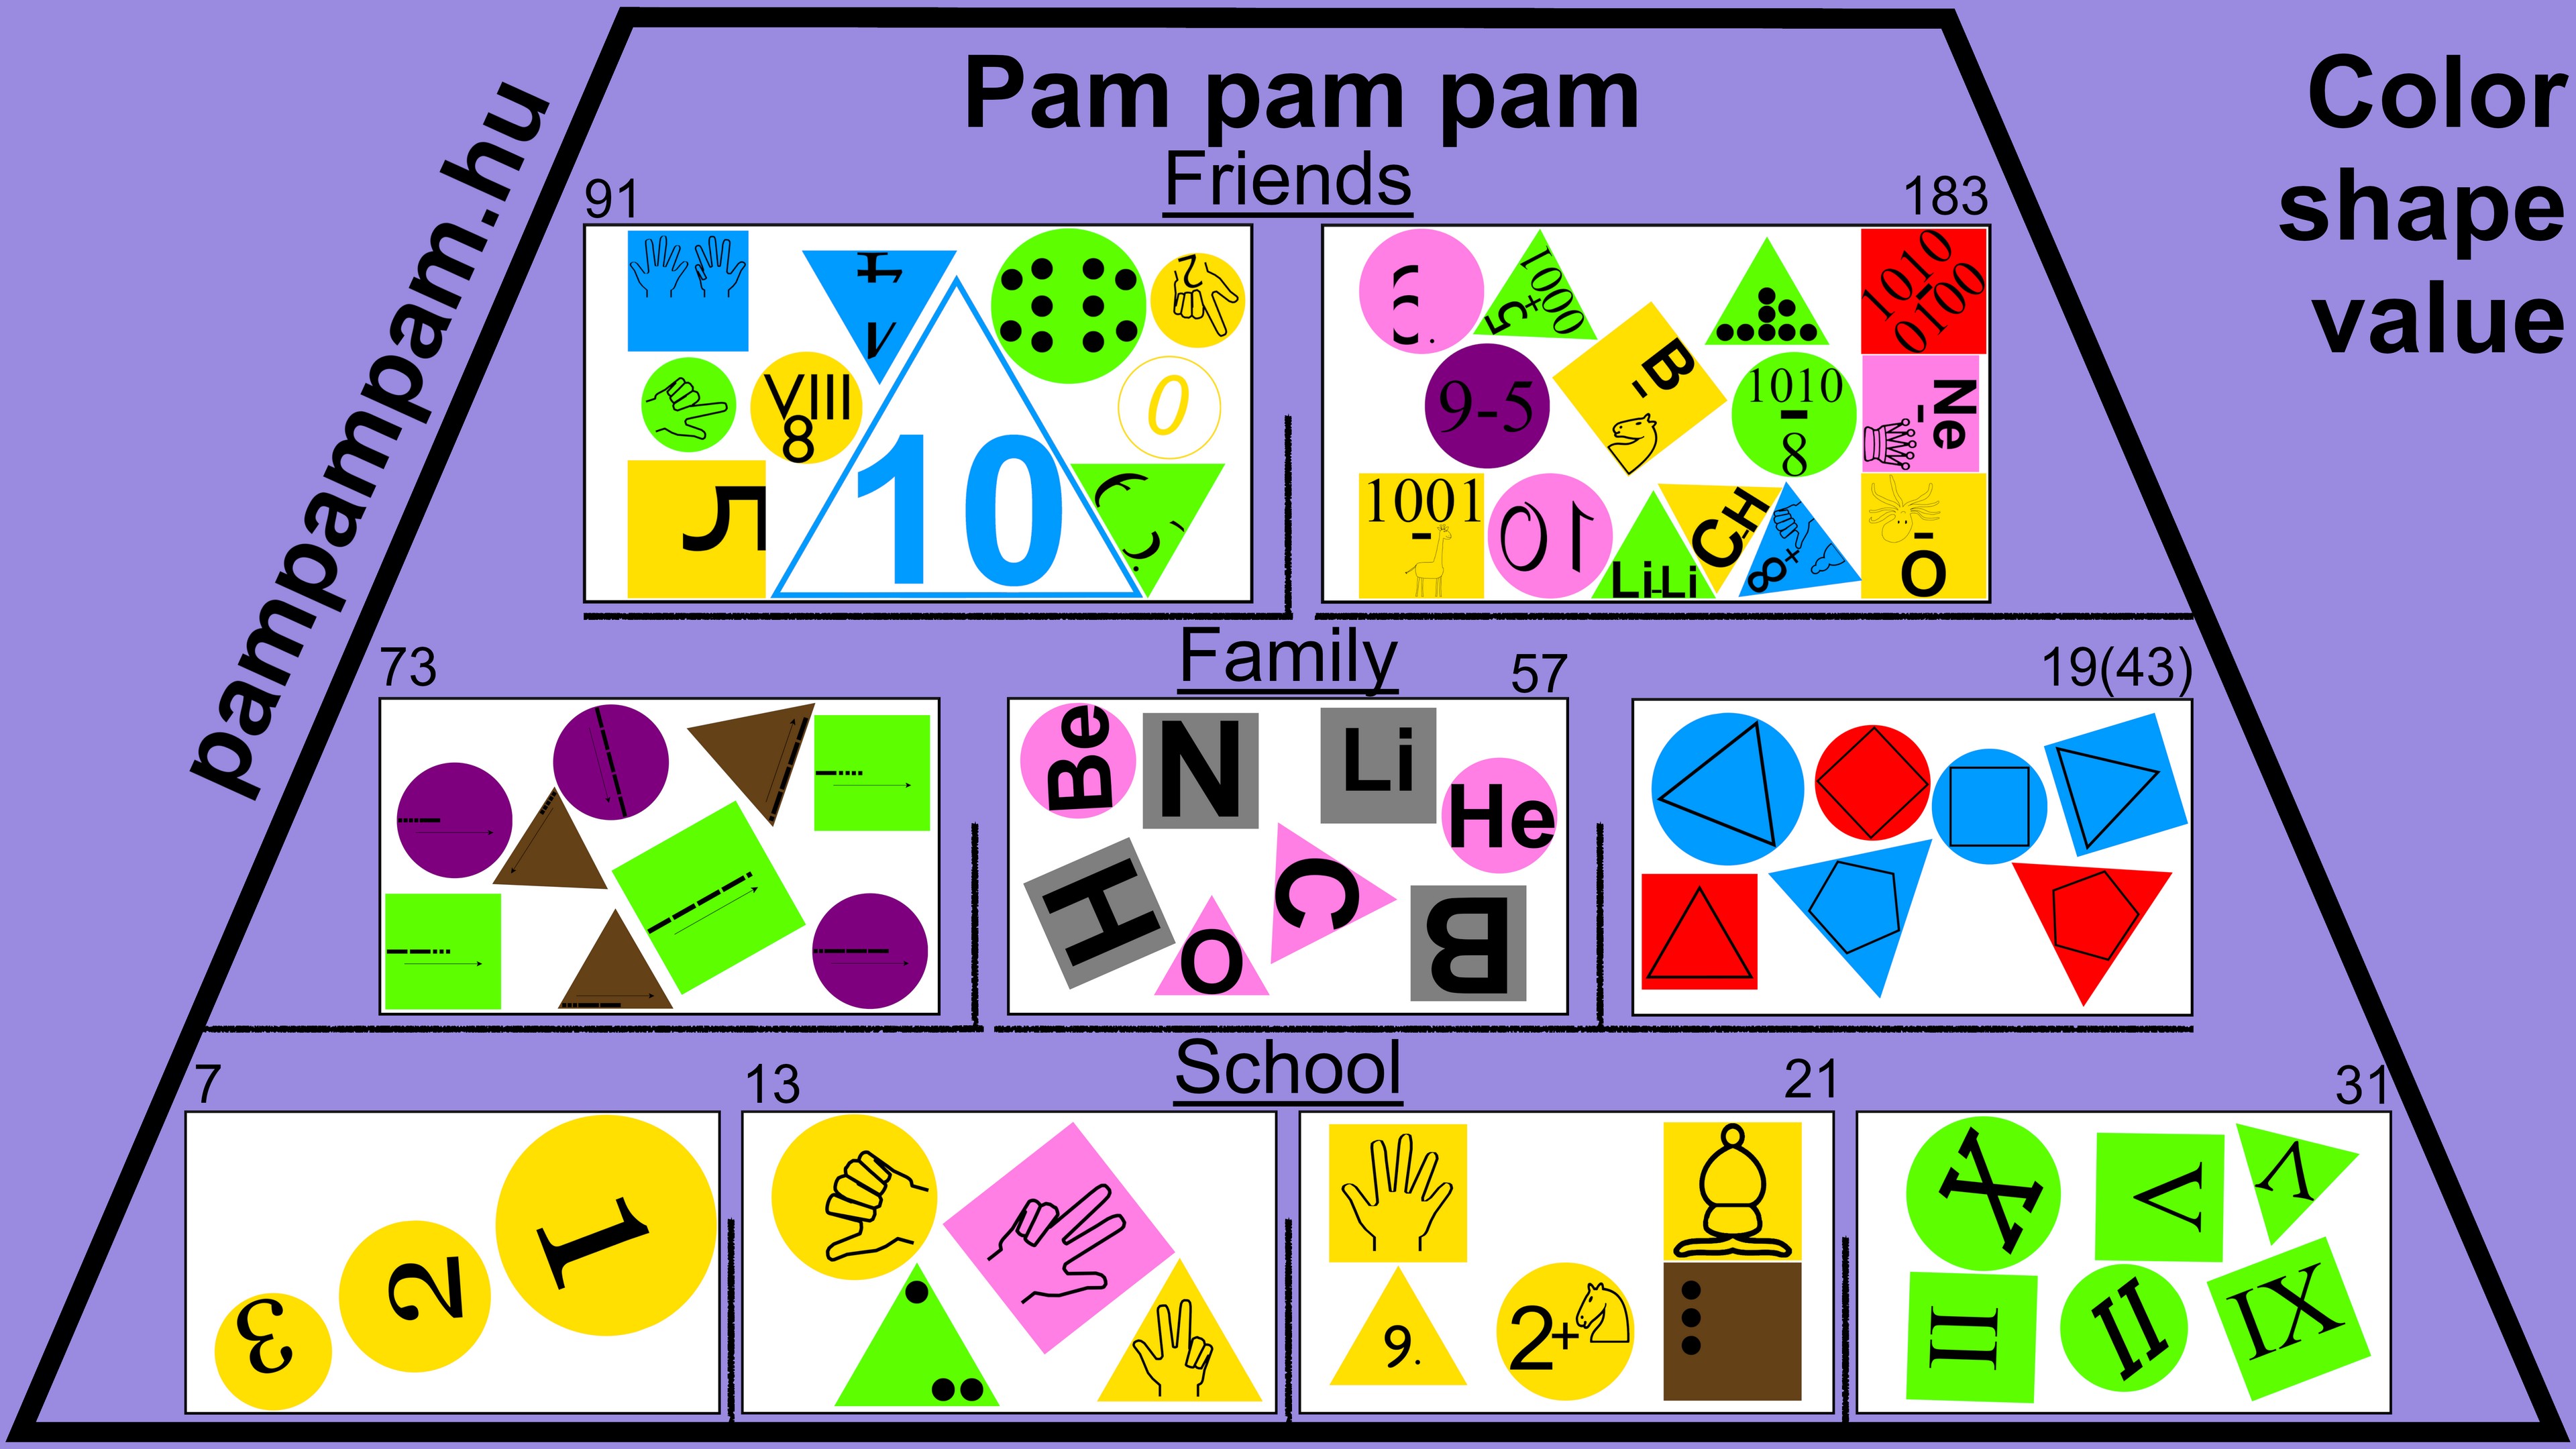 pam_pam_pam_pyramid.jpg